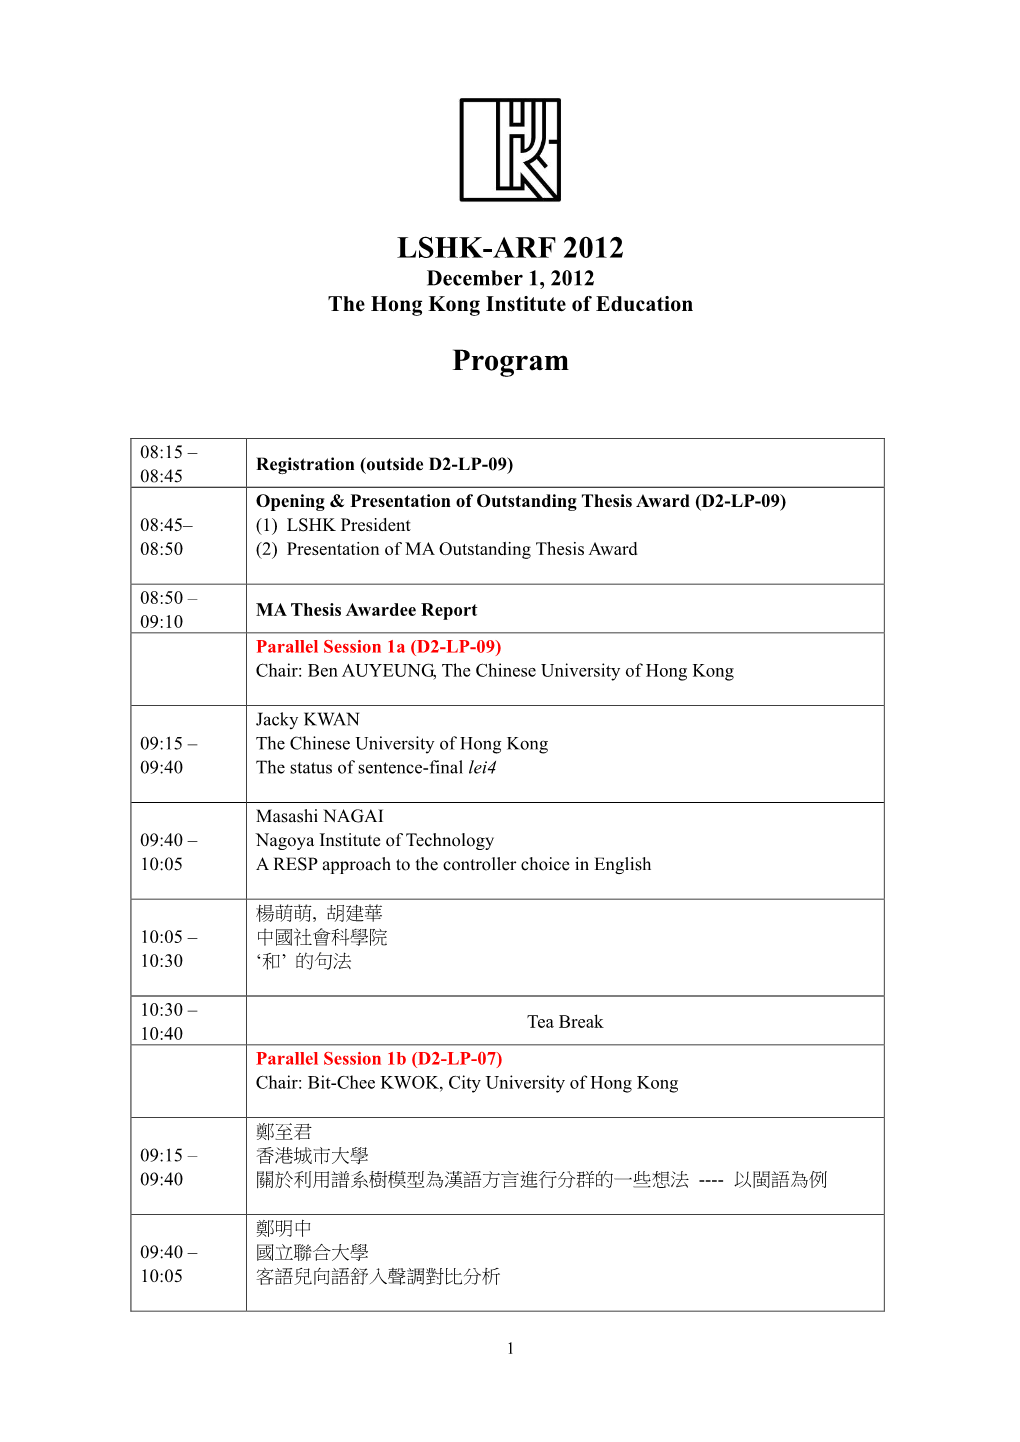 LSHK-ARF 2012 Program